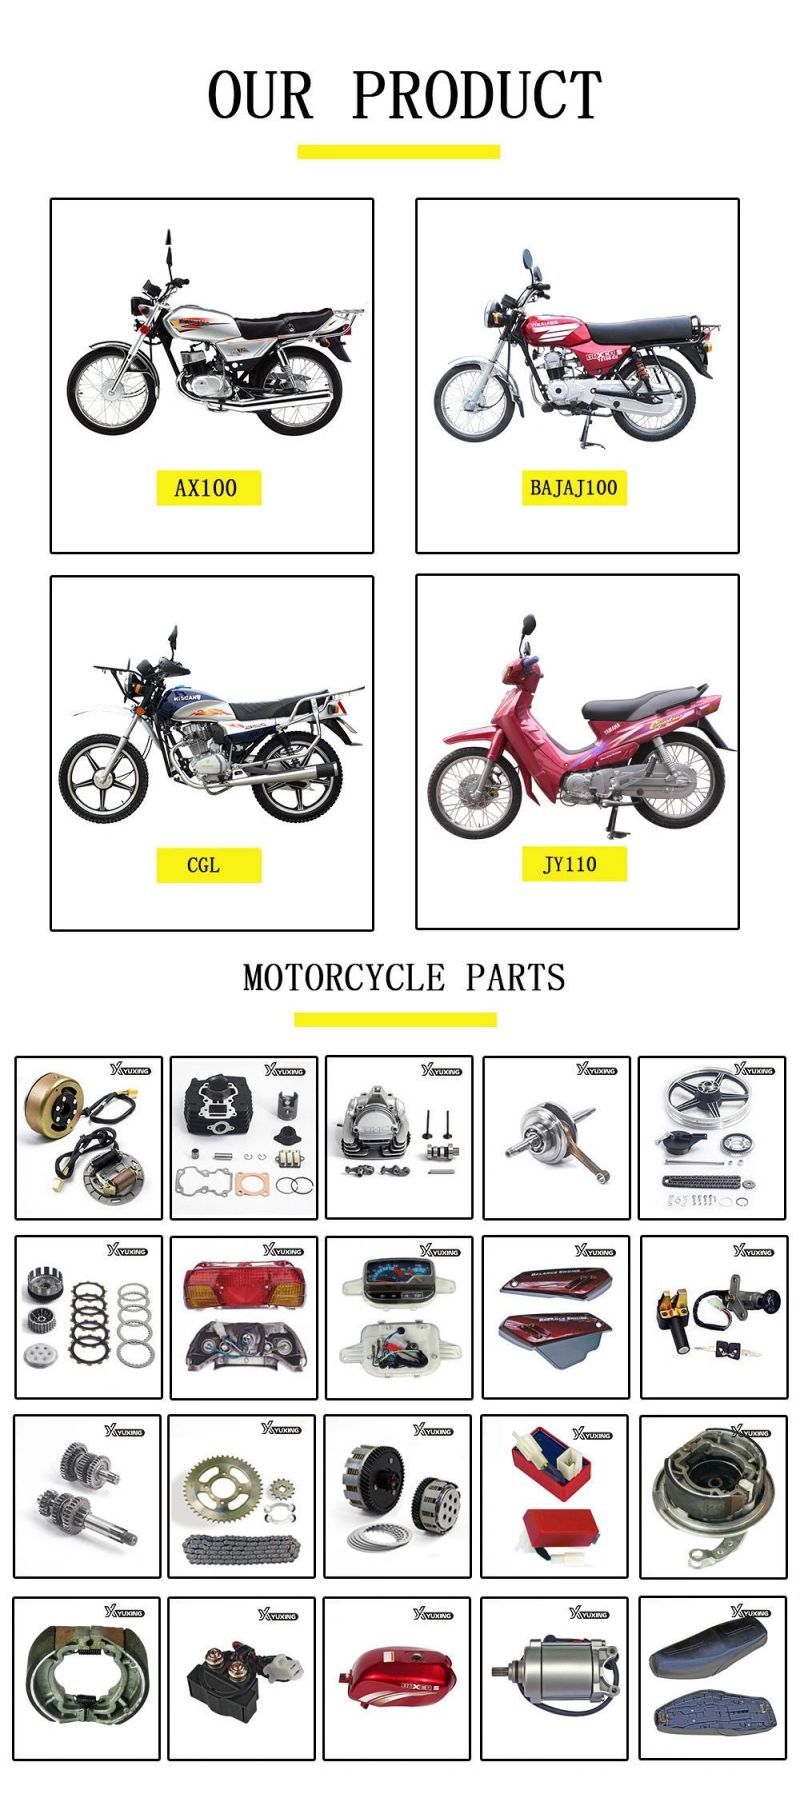 Bajaj 100 Motorcycle Engine Parts Motorcycle Stator Magneto Coil